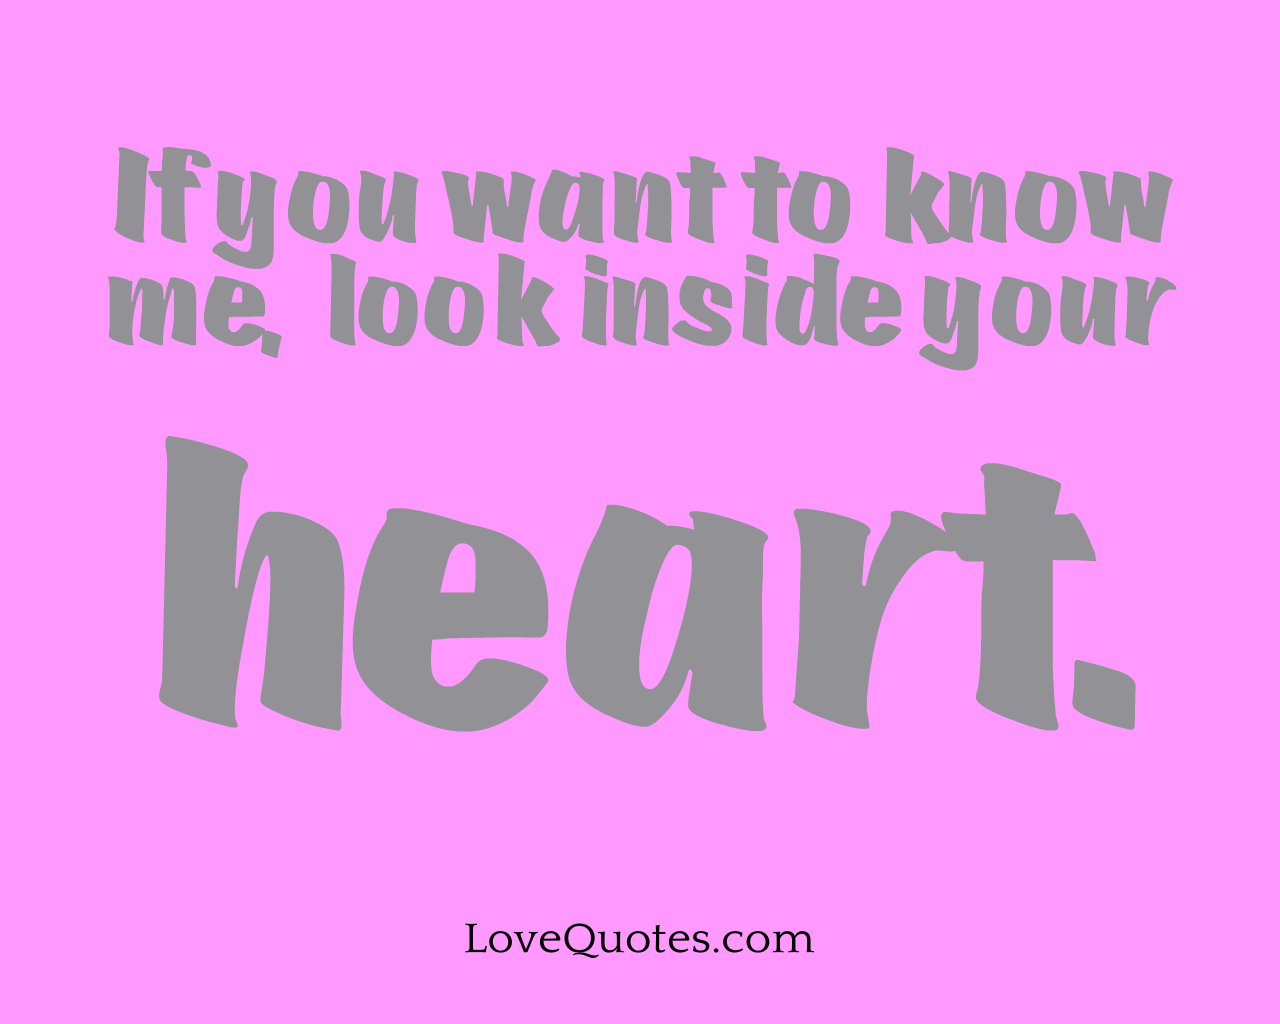 Inside Your Heart